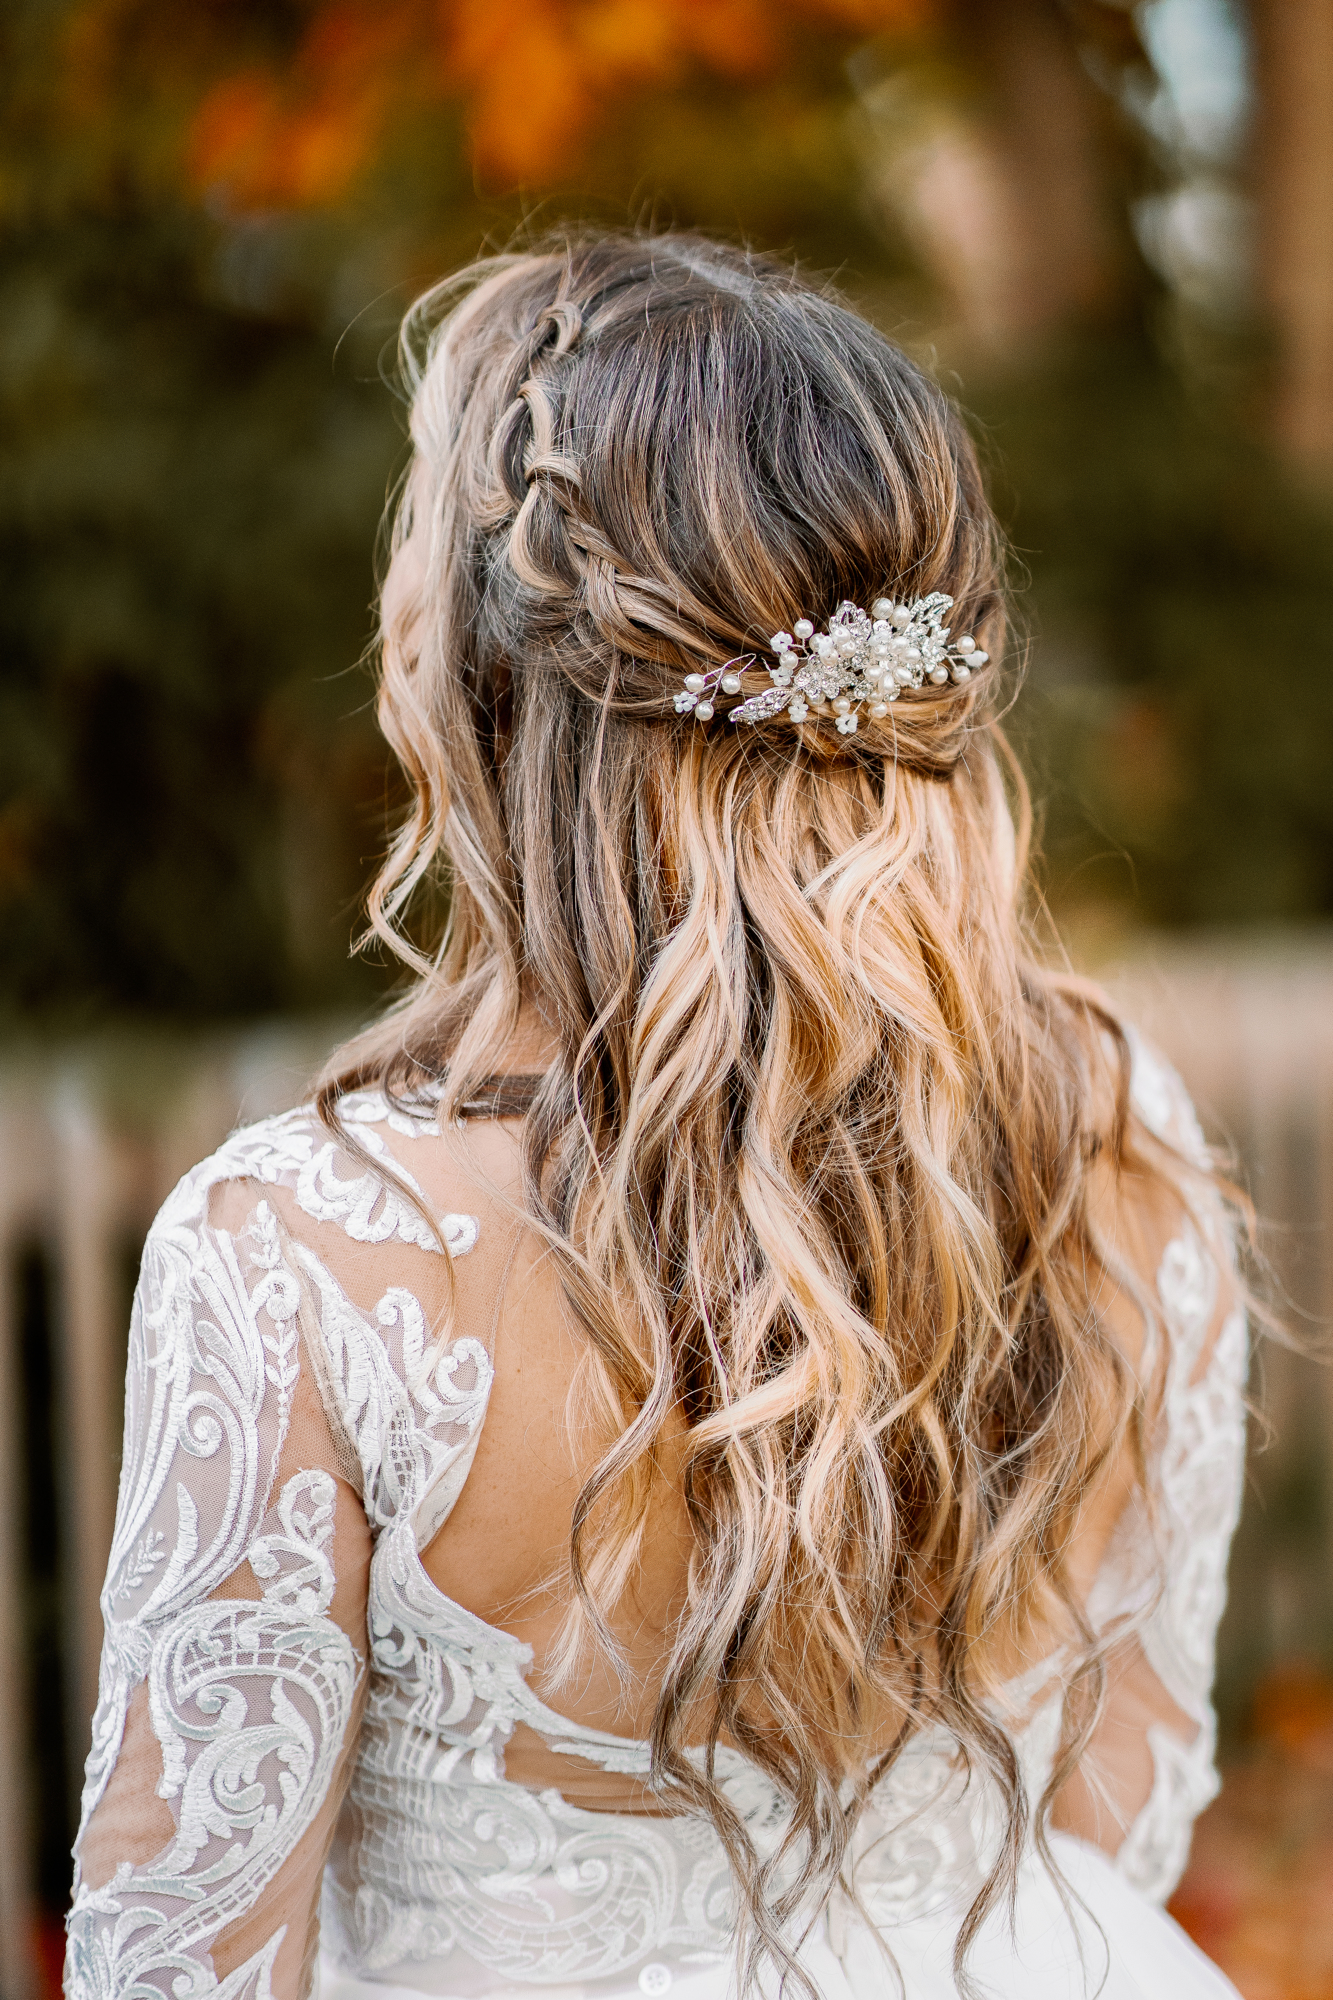 Bridal hair inspiration for upstate fall wedding